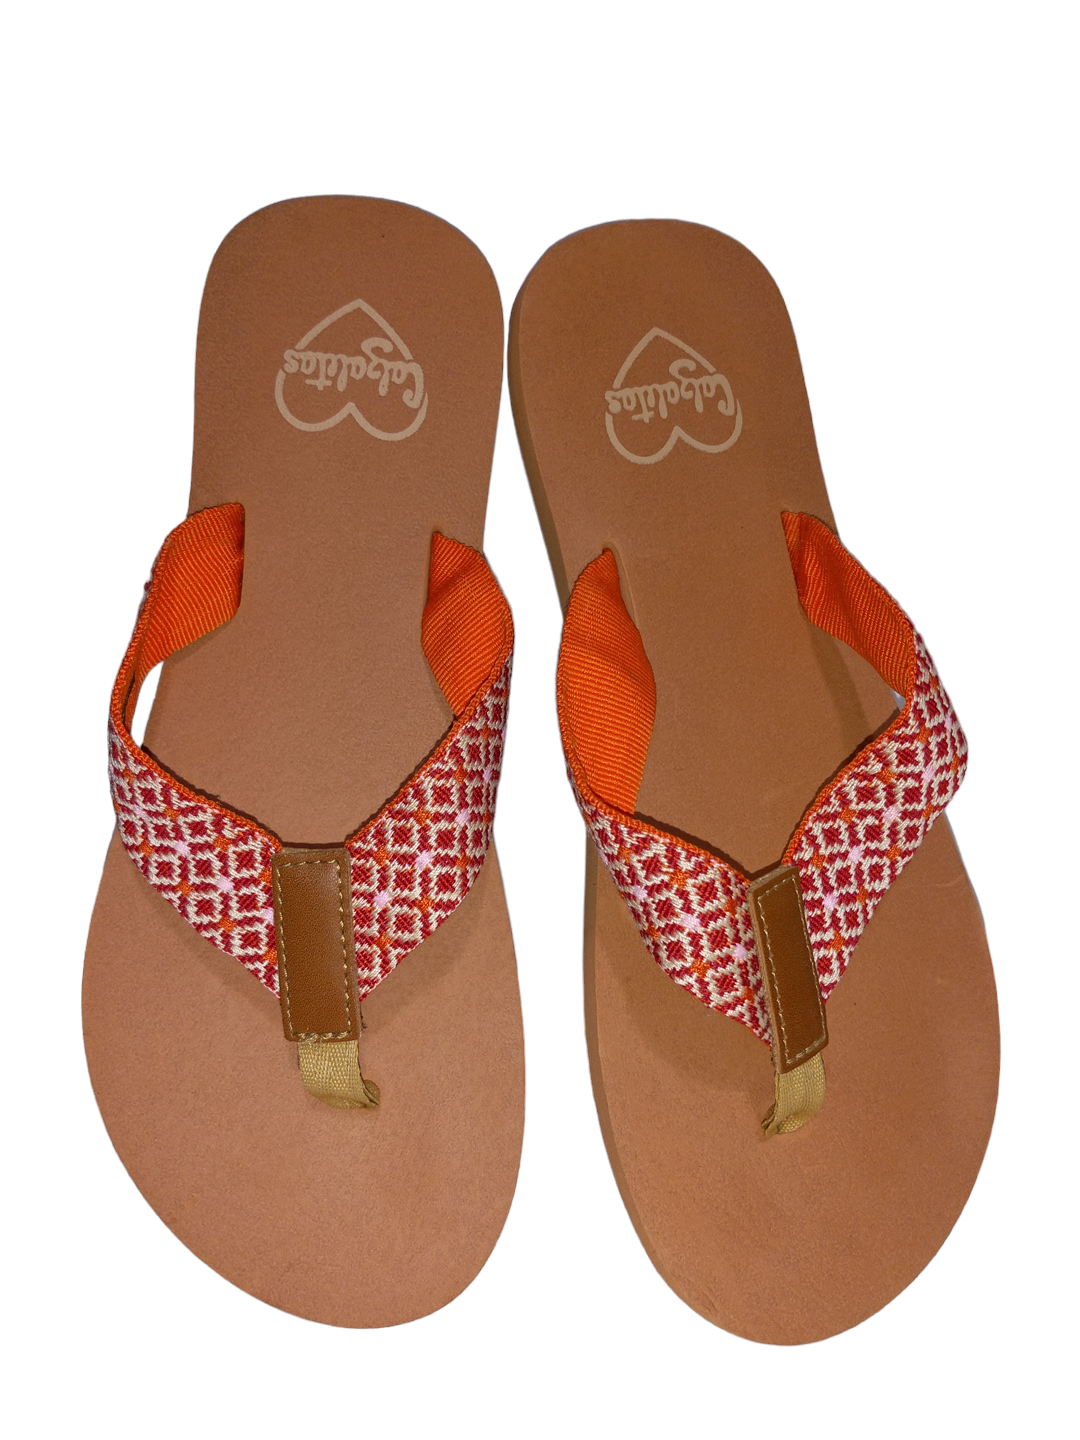 Orange & White Sandals Flip Flops Clothes Mentor, Size 8